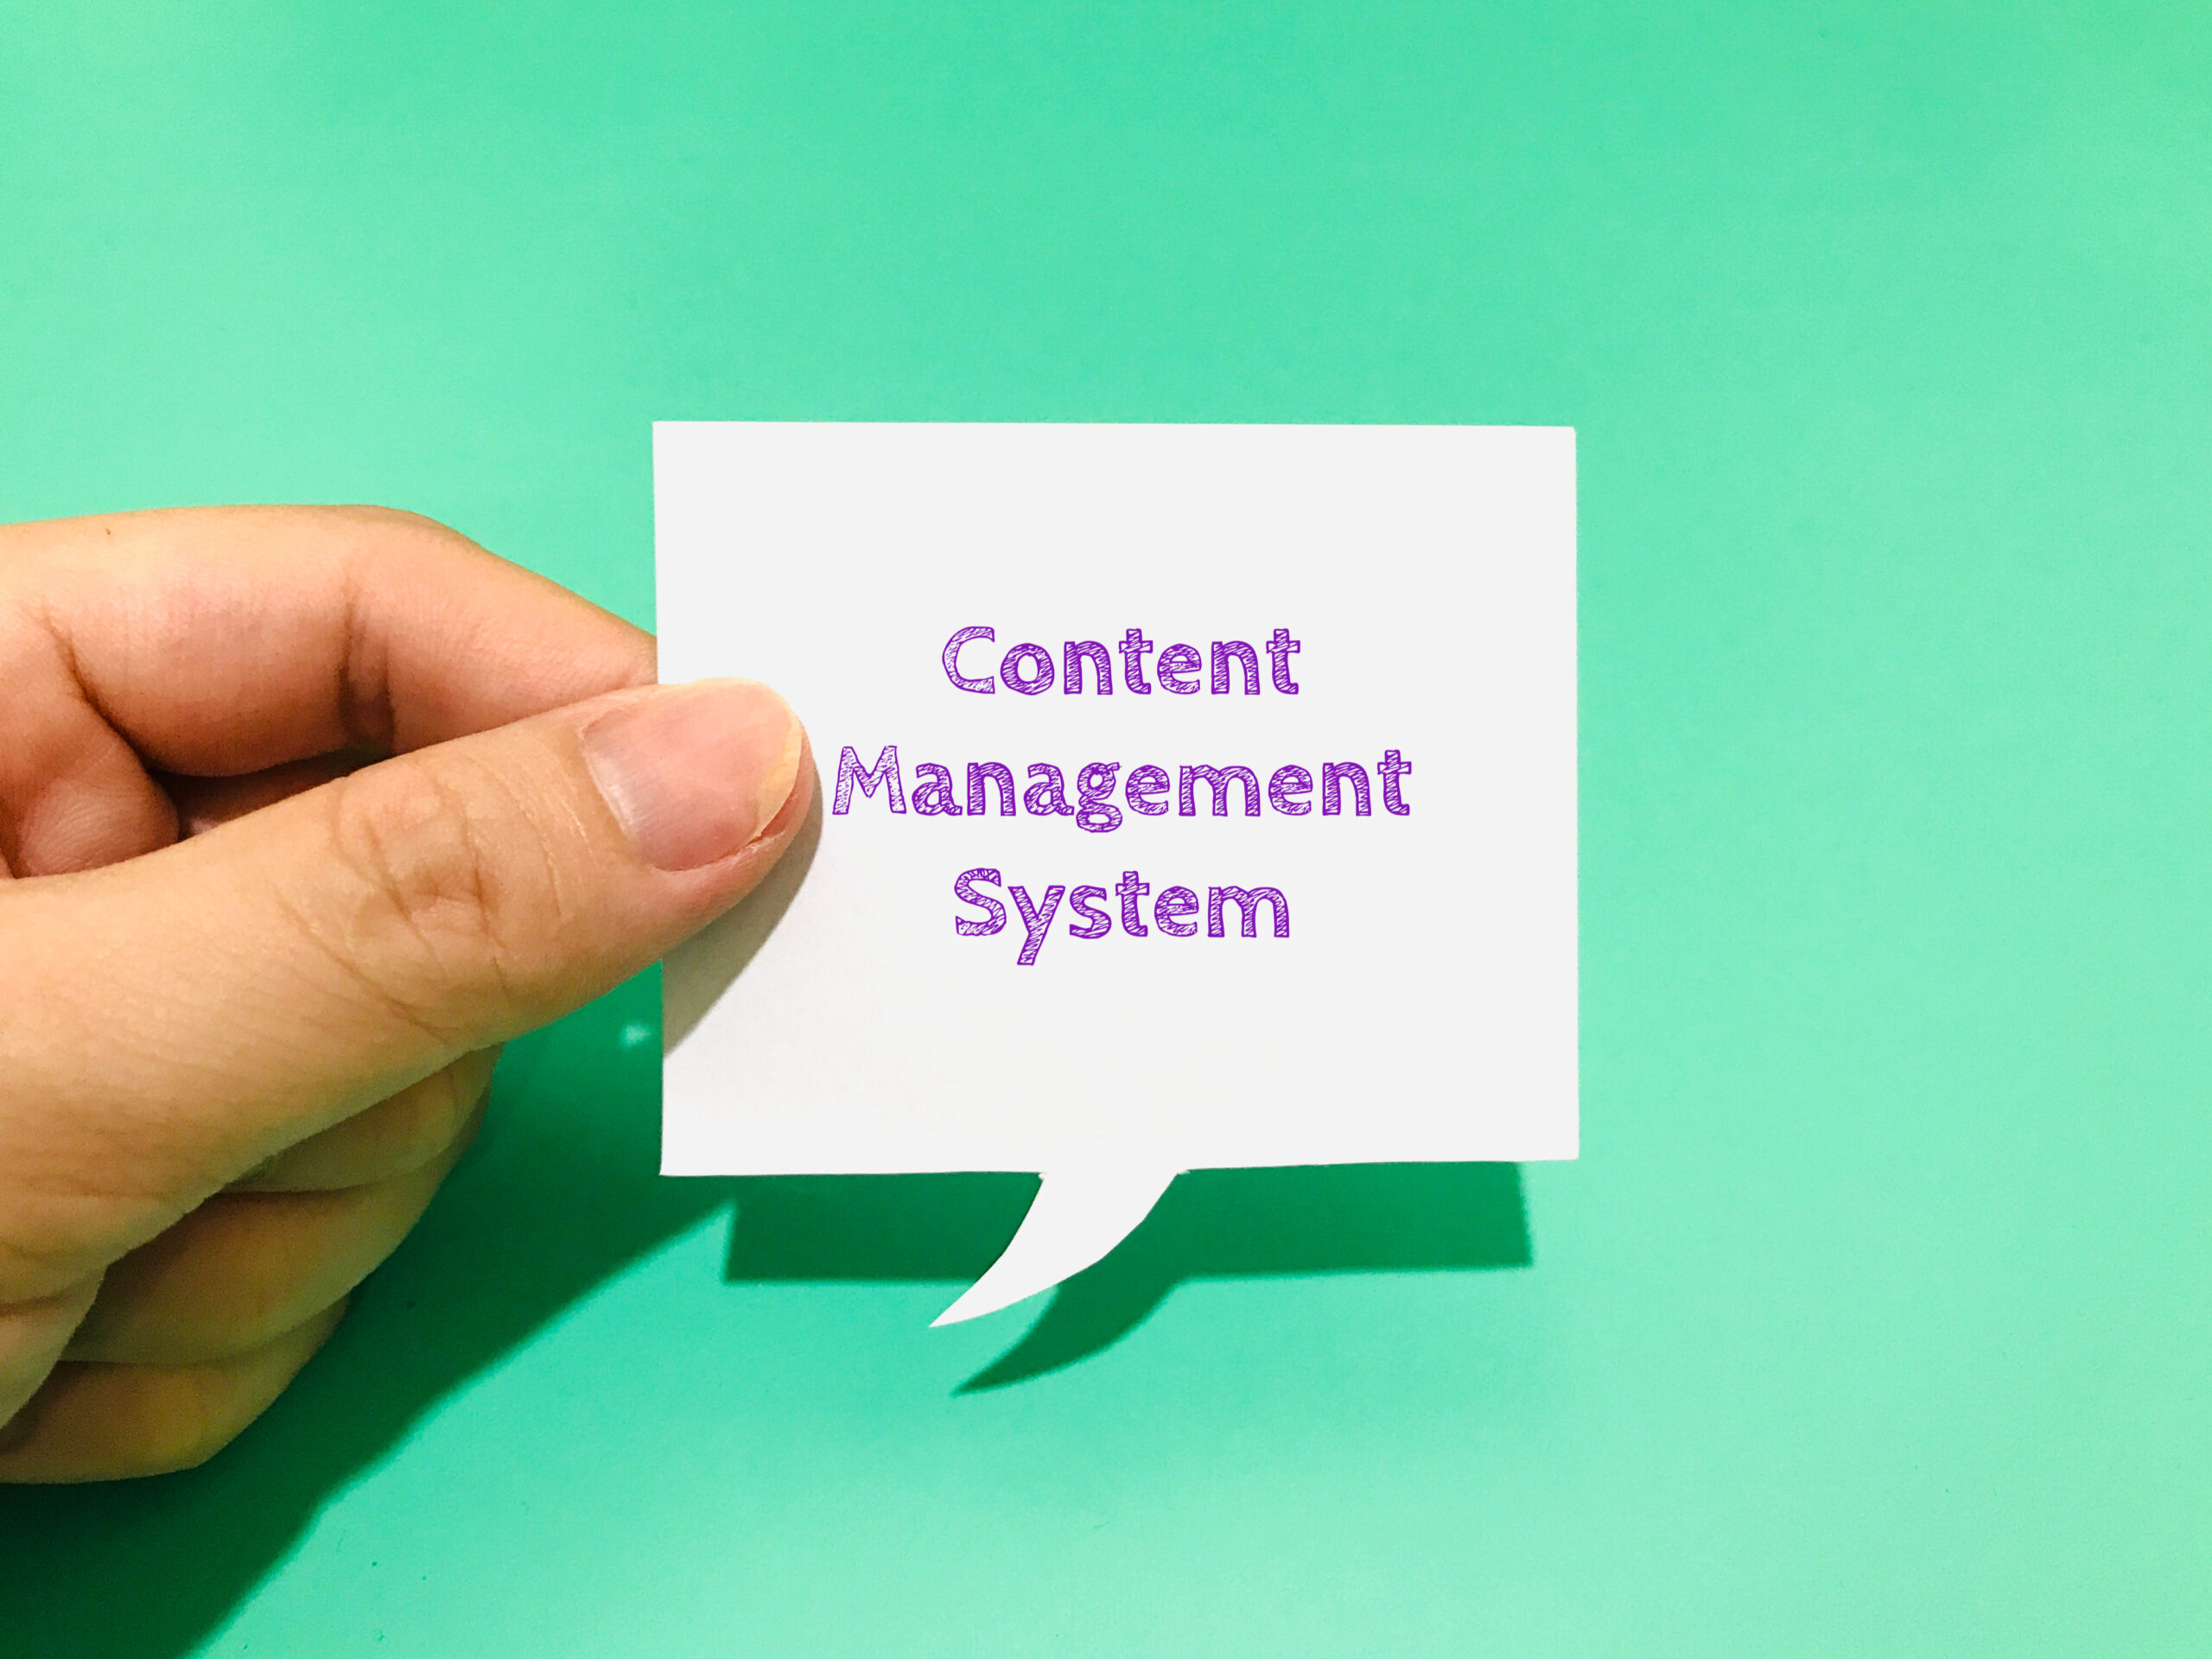 Content Management system
